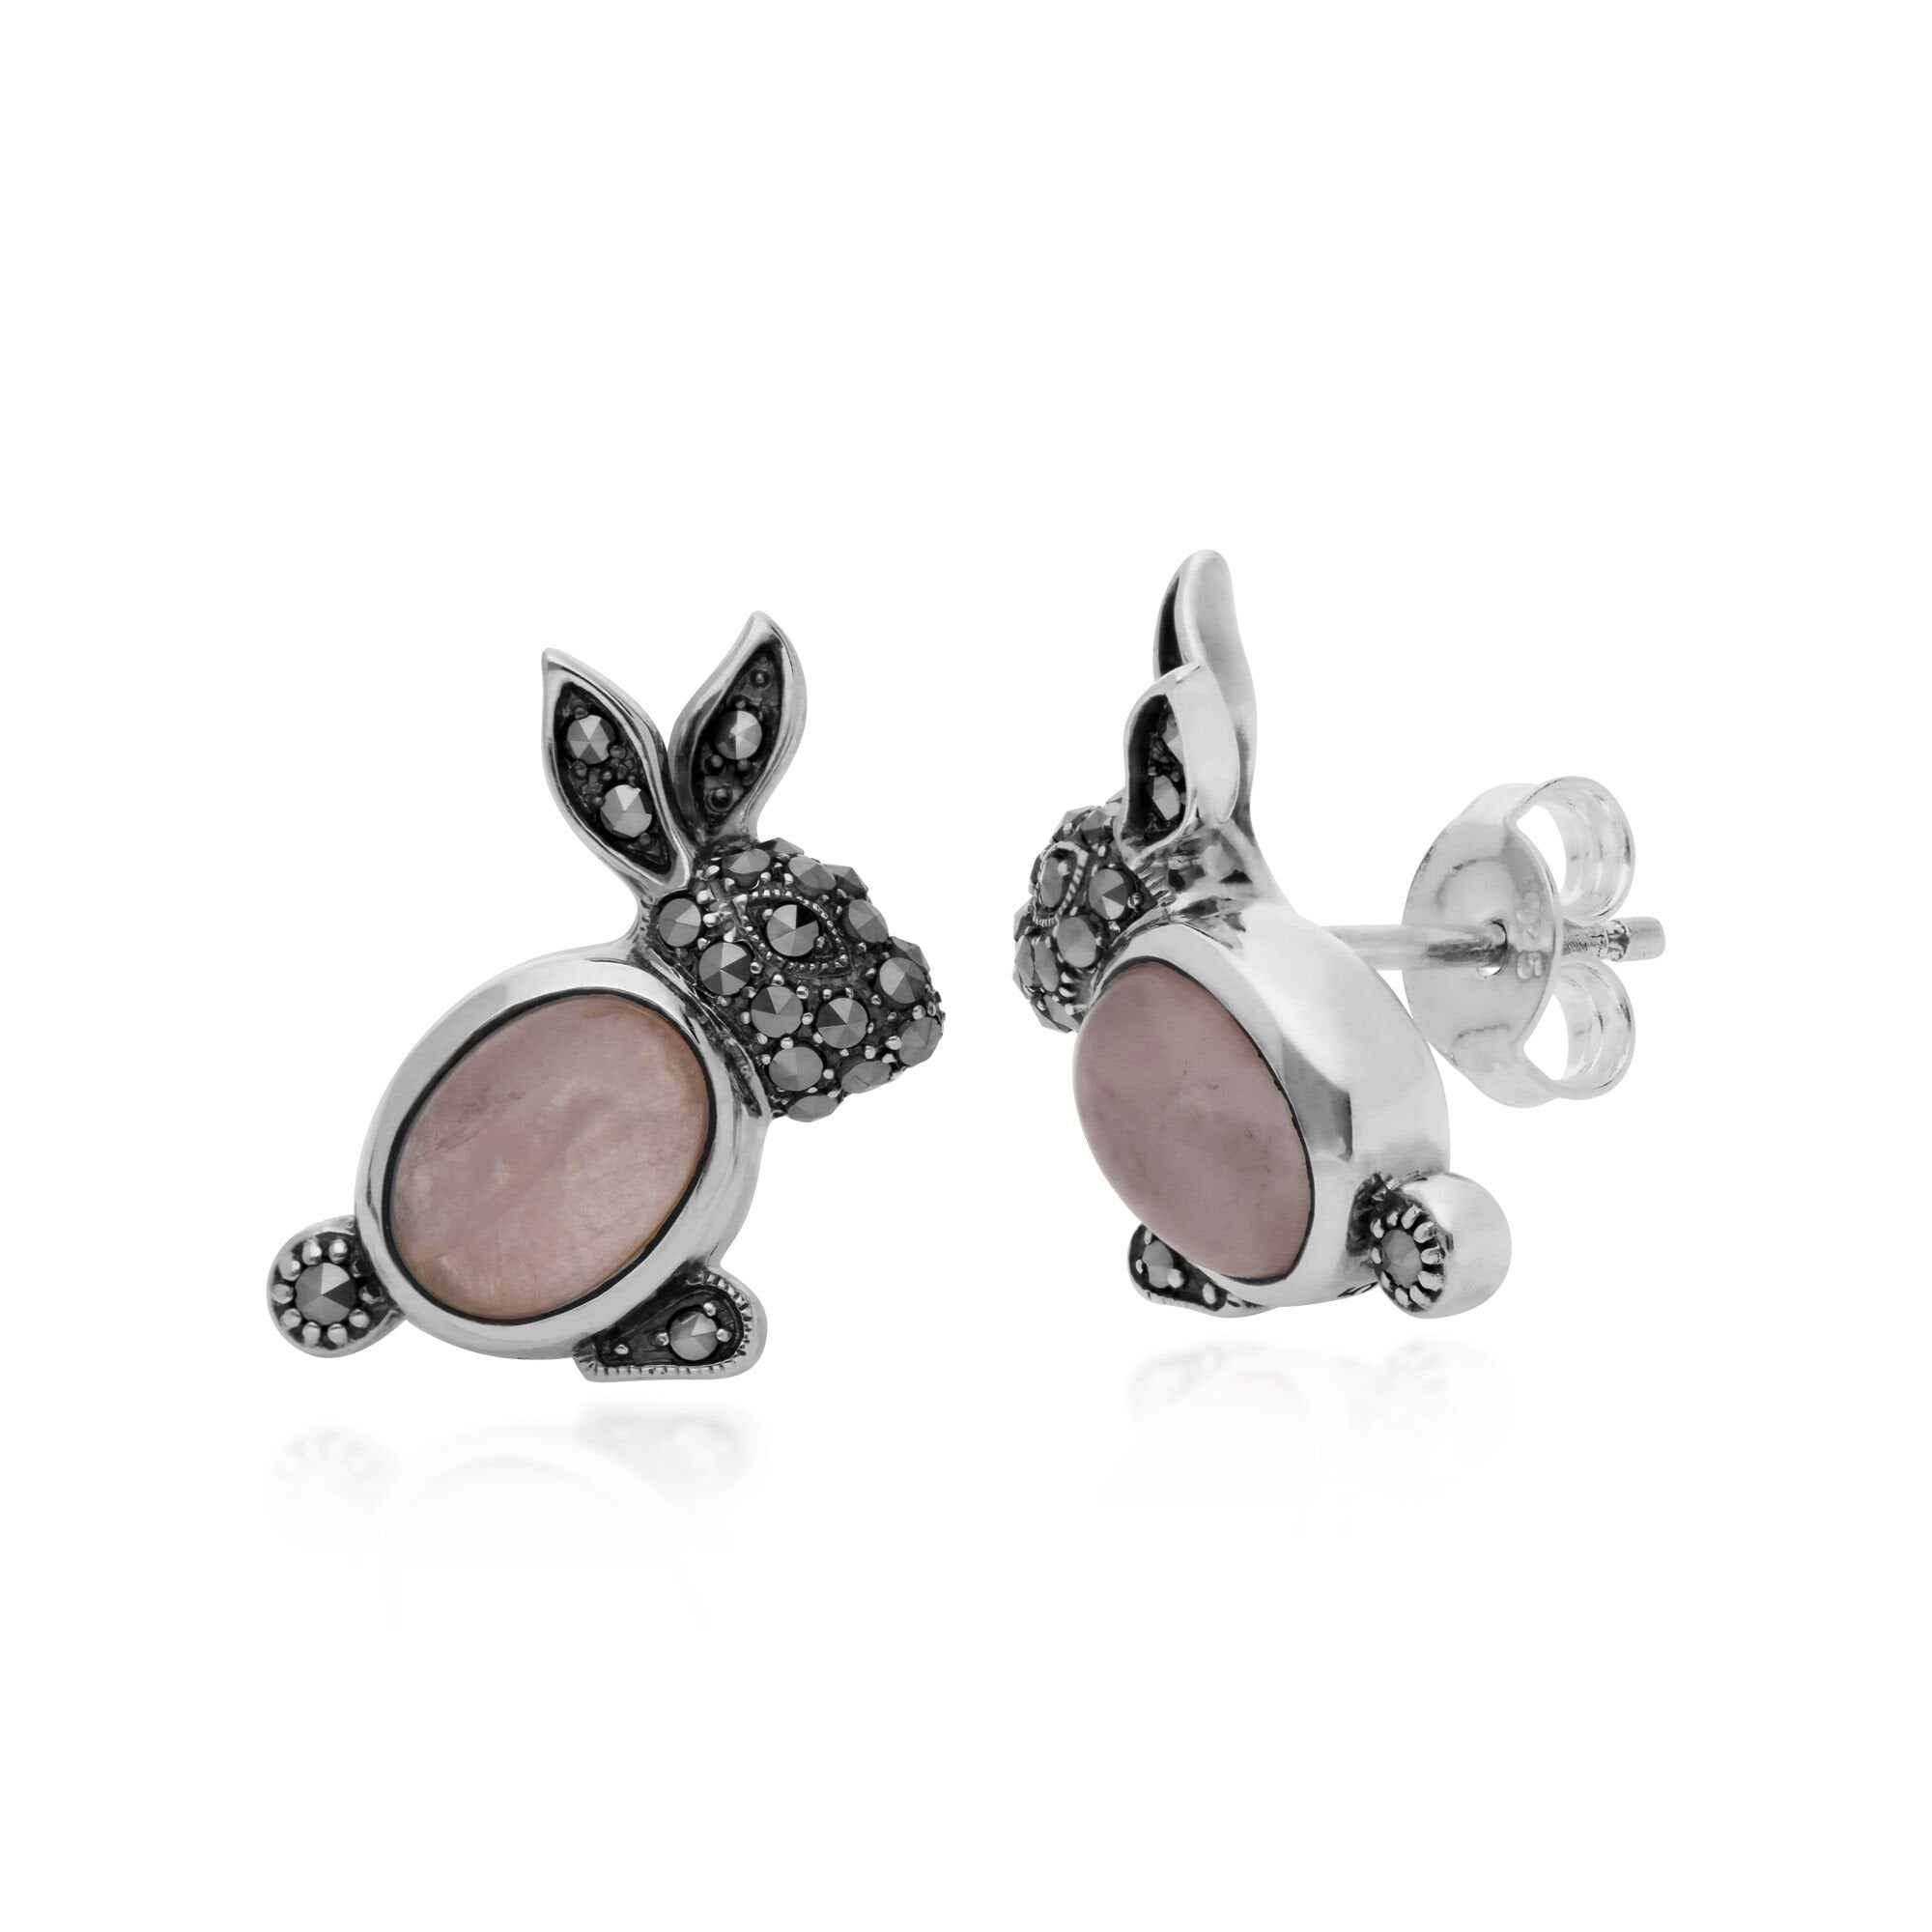 Gemondo Sterling Silver Rose Quartz & Marcasite Rabbit Stud Earrings